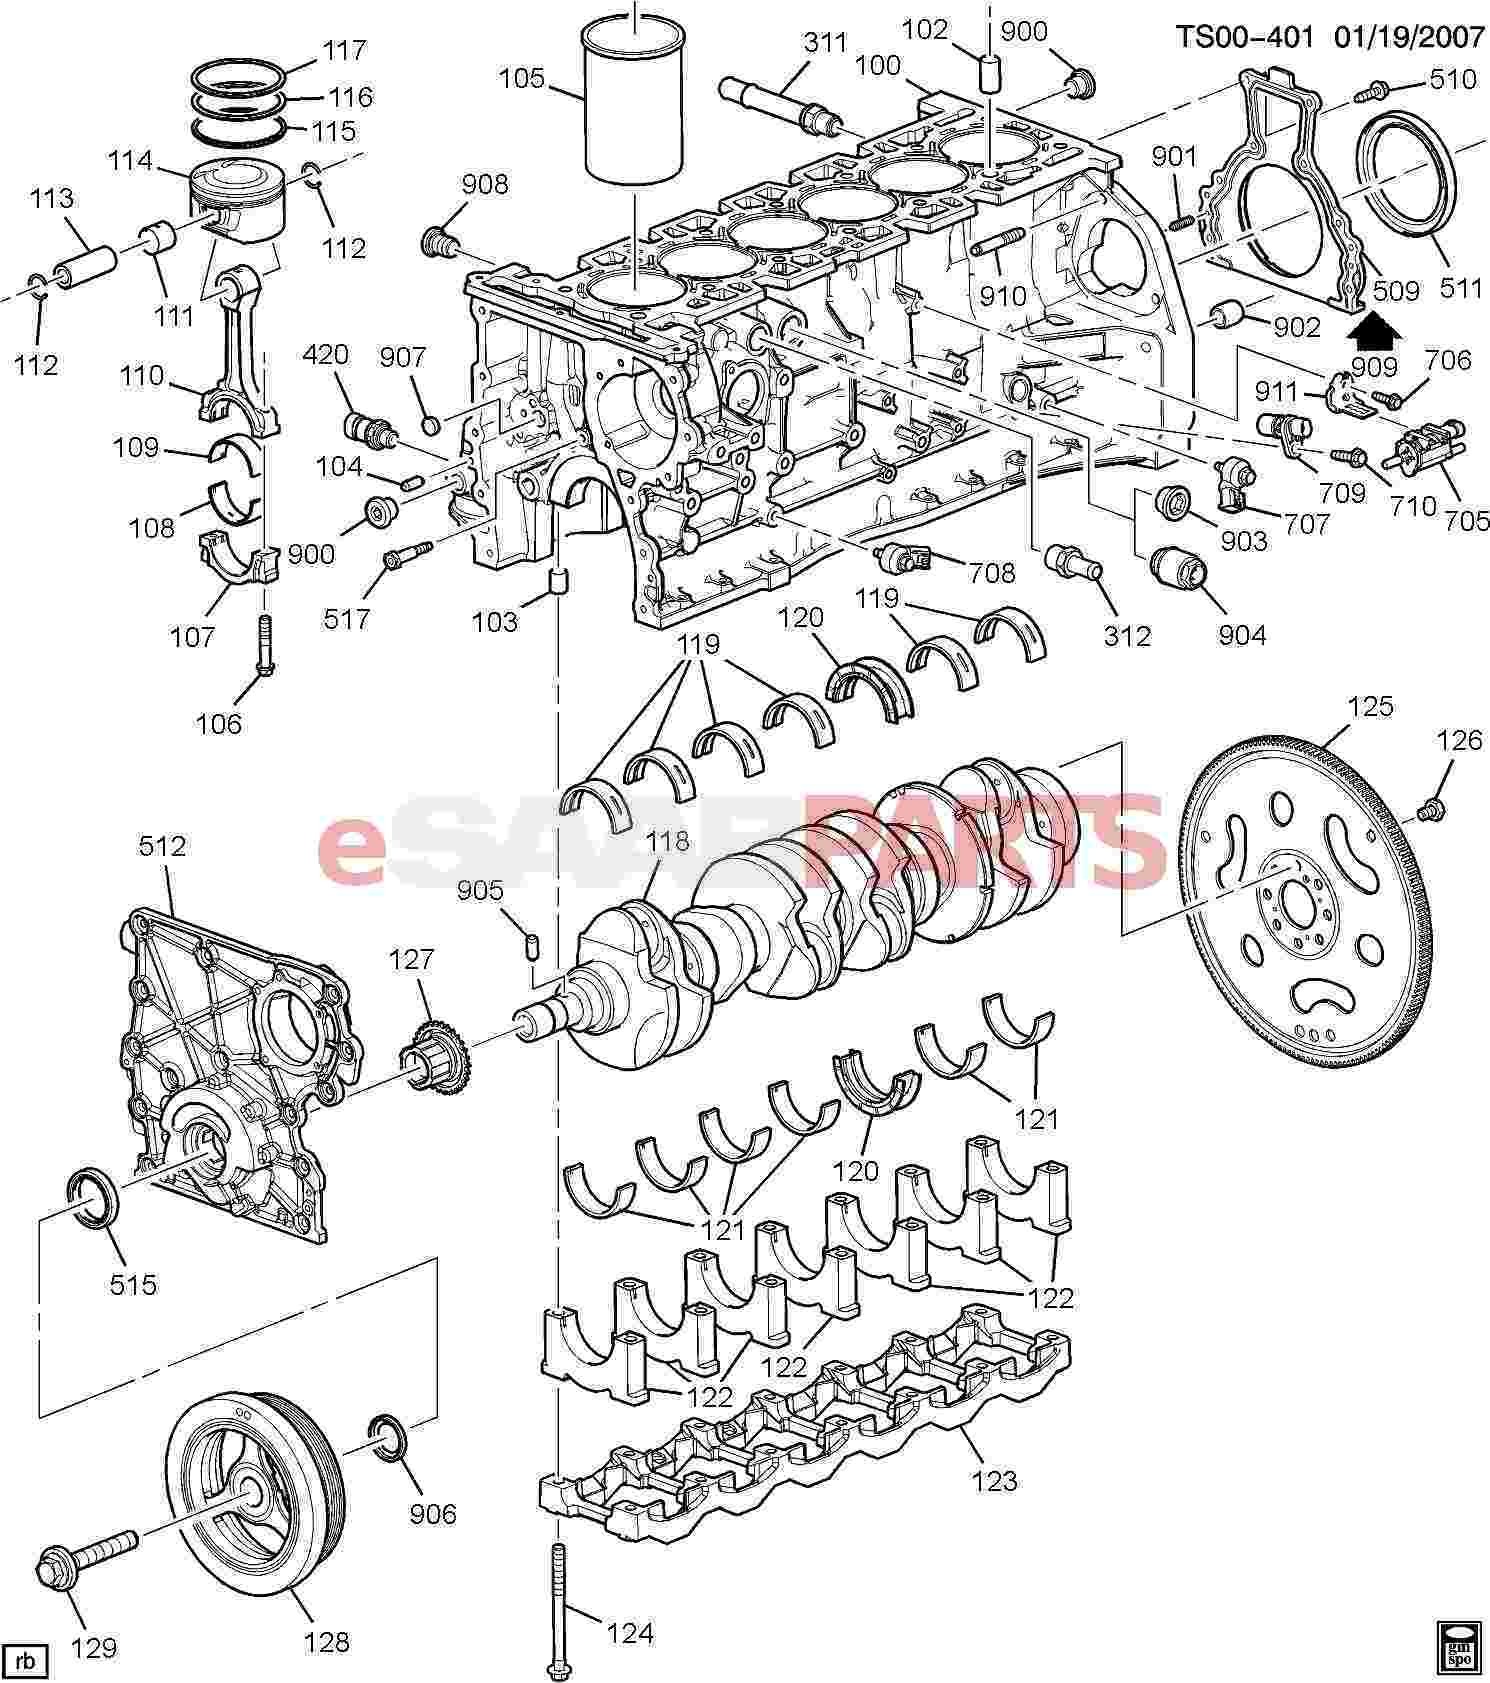 Chevy Trailblazer Engine Diagram ] Saab Bolt Hfh M6x1x20 17 5 Thd 14 2 O D 8 8 Gmw3359 Of Chevy Trailblazer Engine Diagram